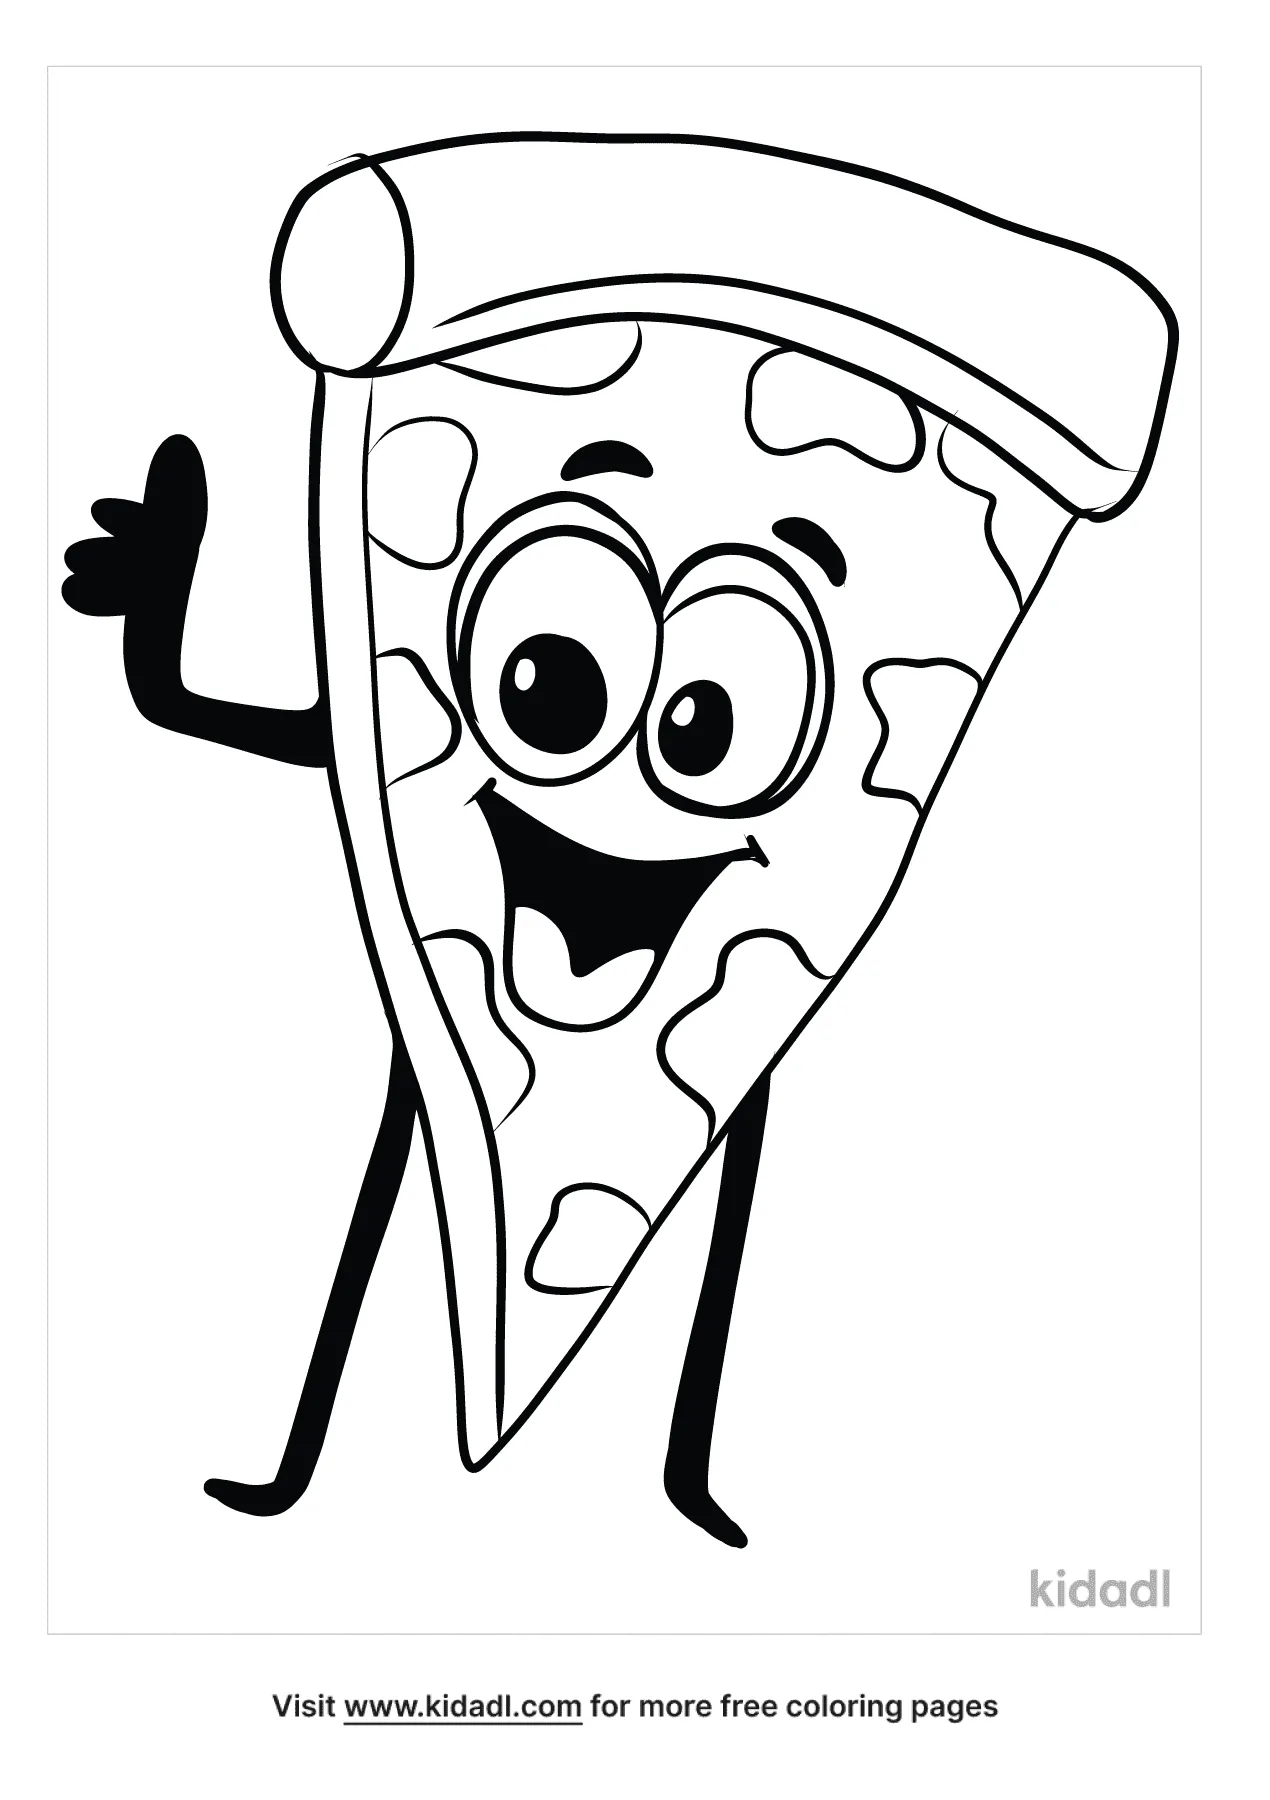 Free Happy Cartoon Pizza Coloring Page | Coloring Page Printables | Kidadl